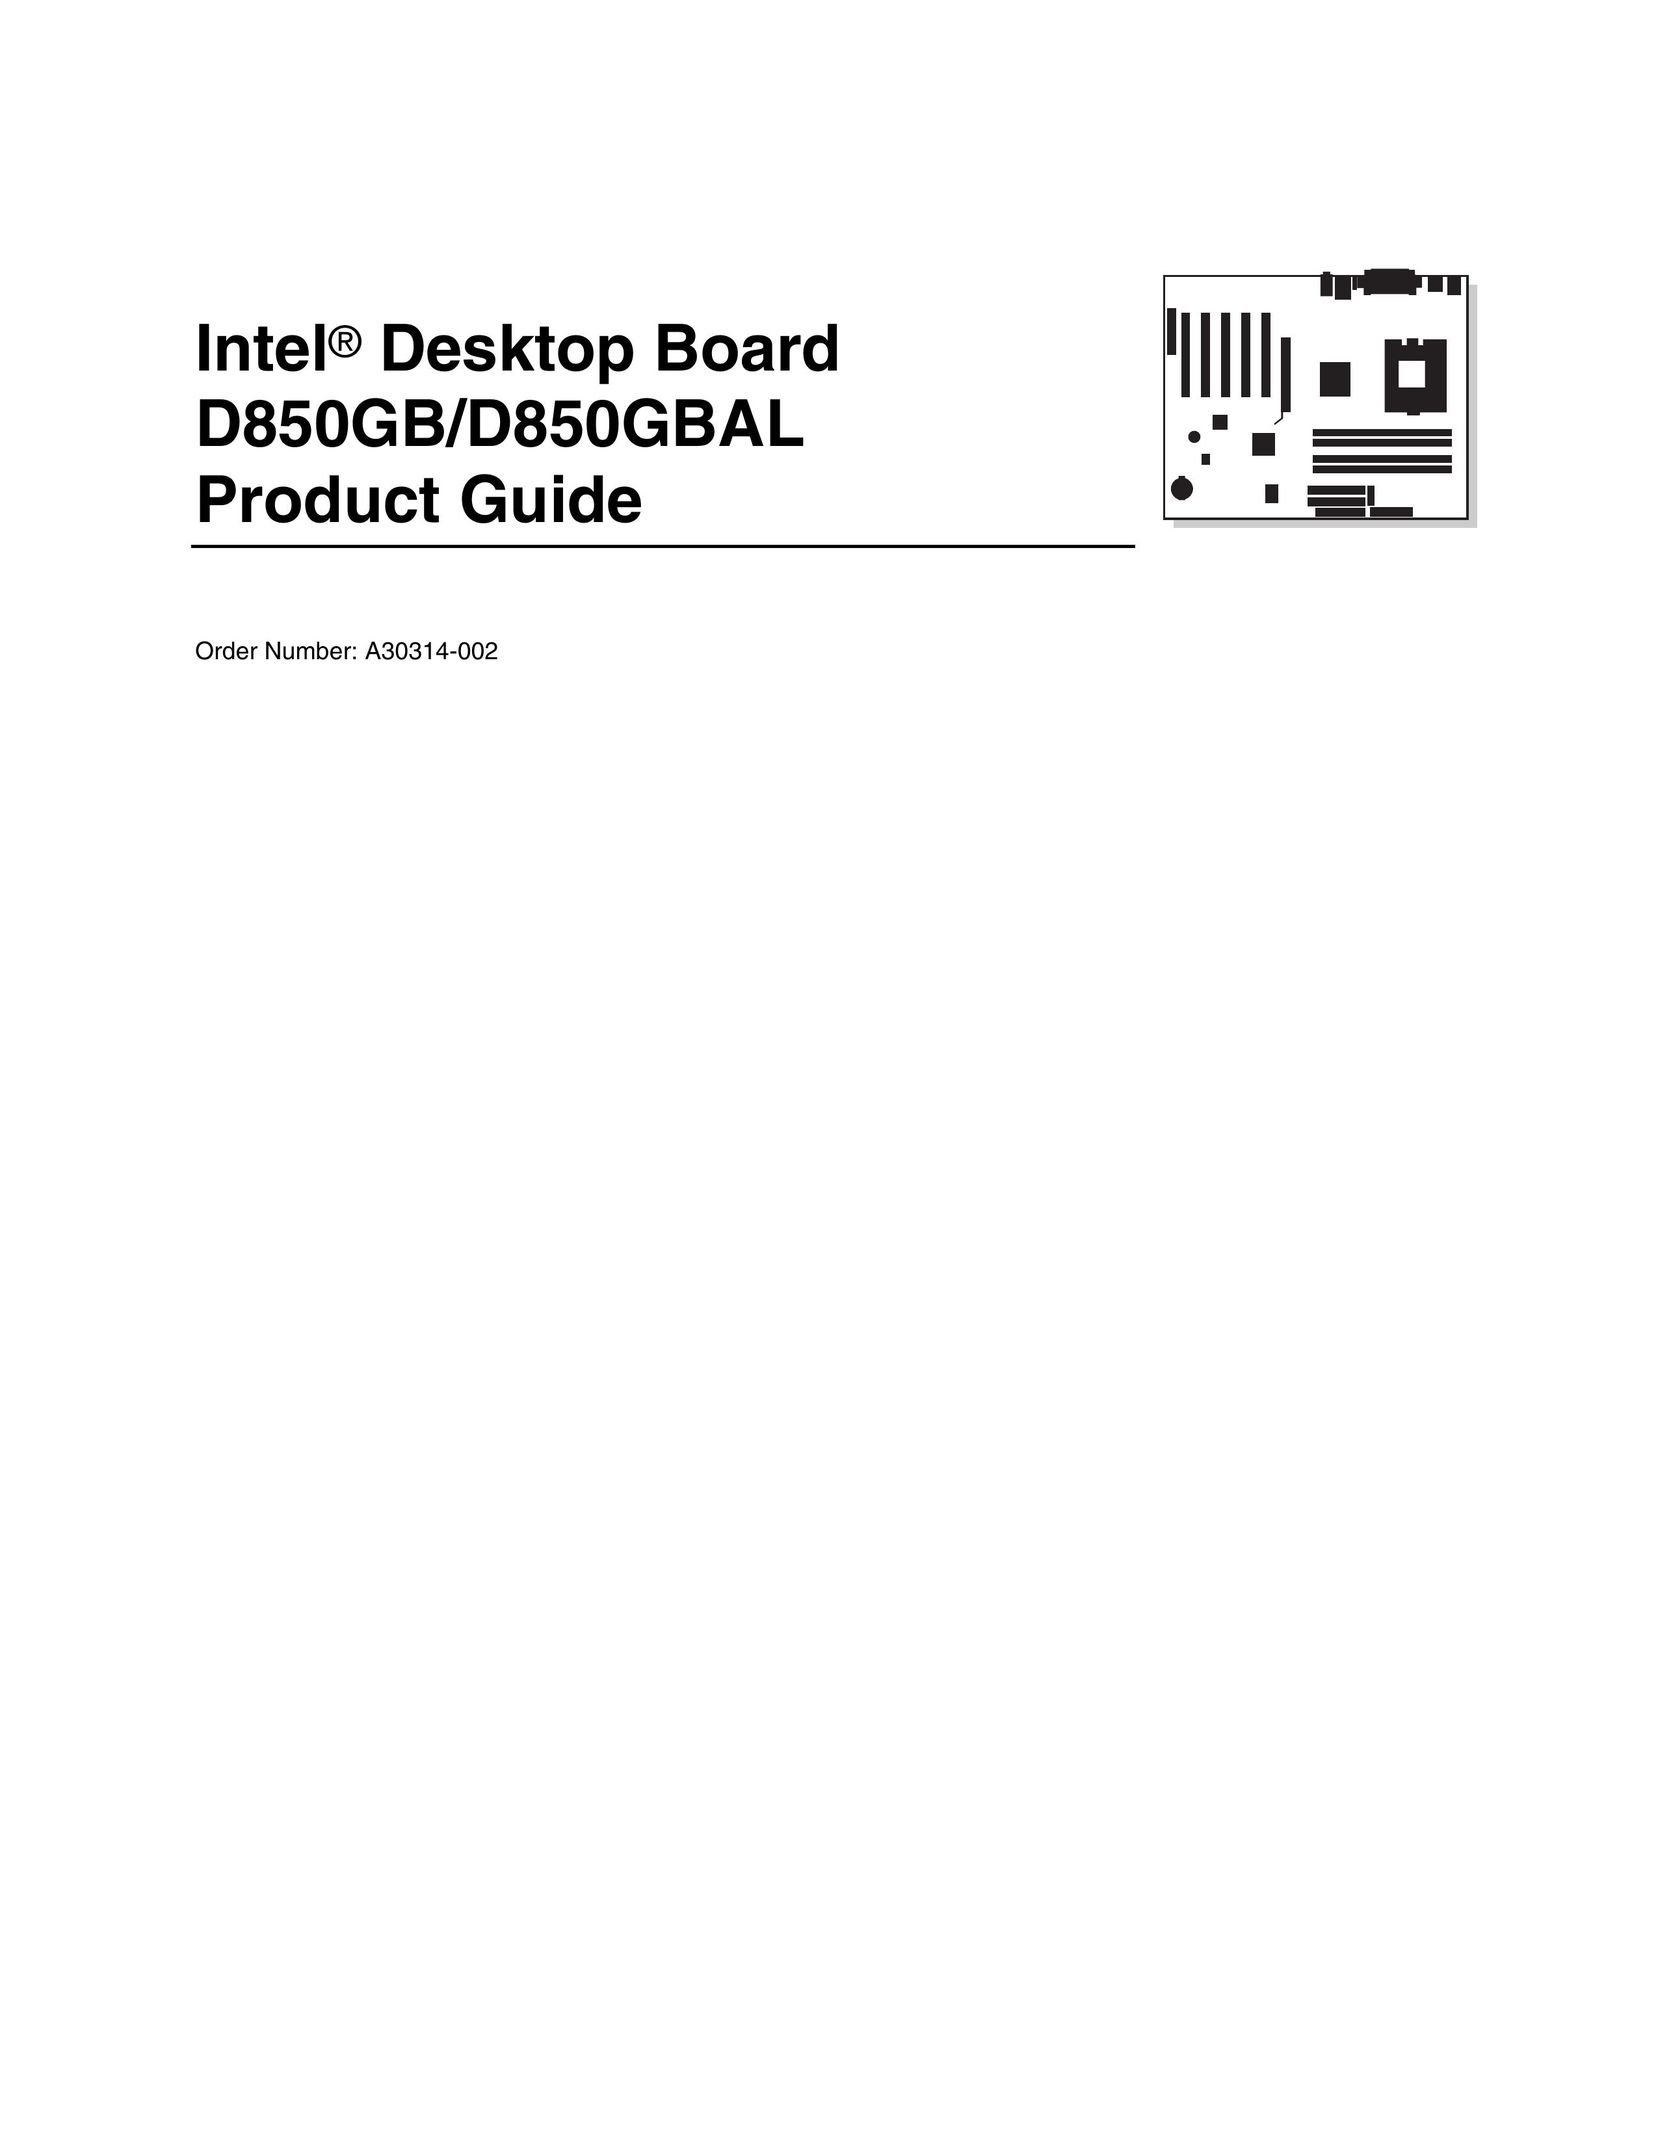 Intel D850GB Telephone User Manual